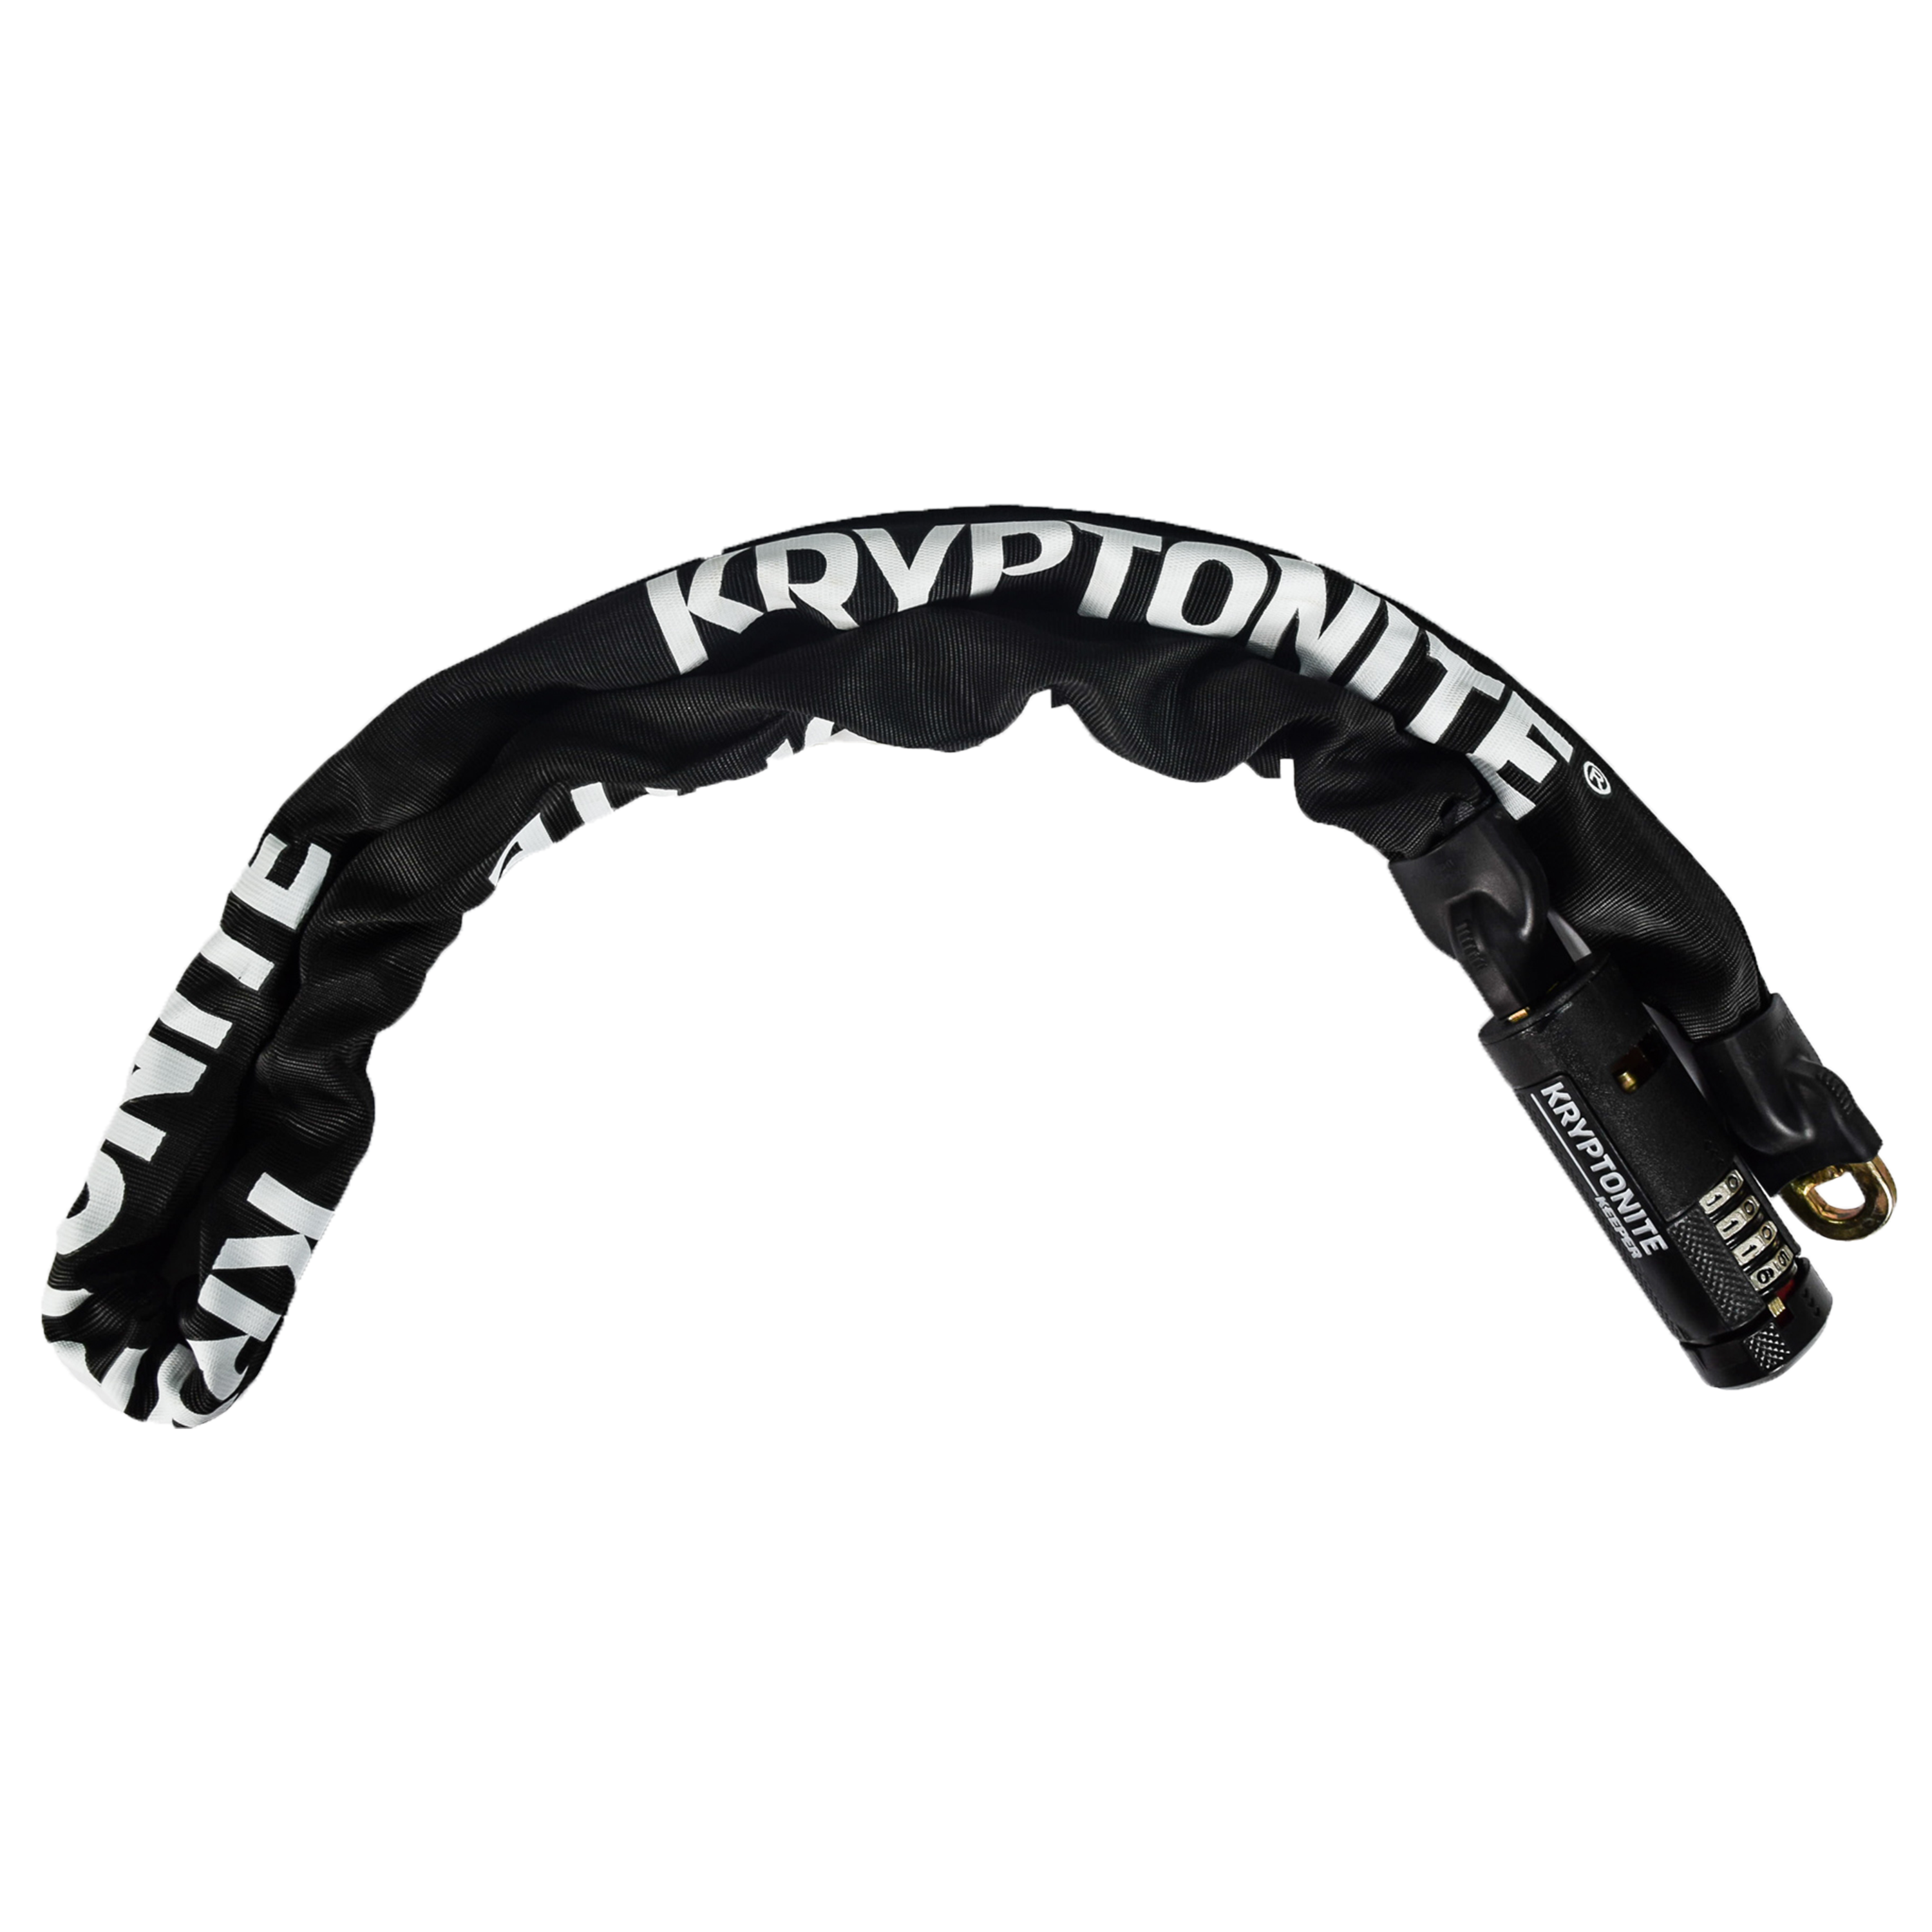 Kryptonite-003298-Keeper-712-47-4-Digit-Resettable-Combo-Chain-Lock-image-1